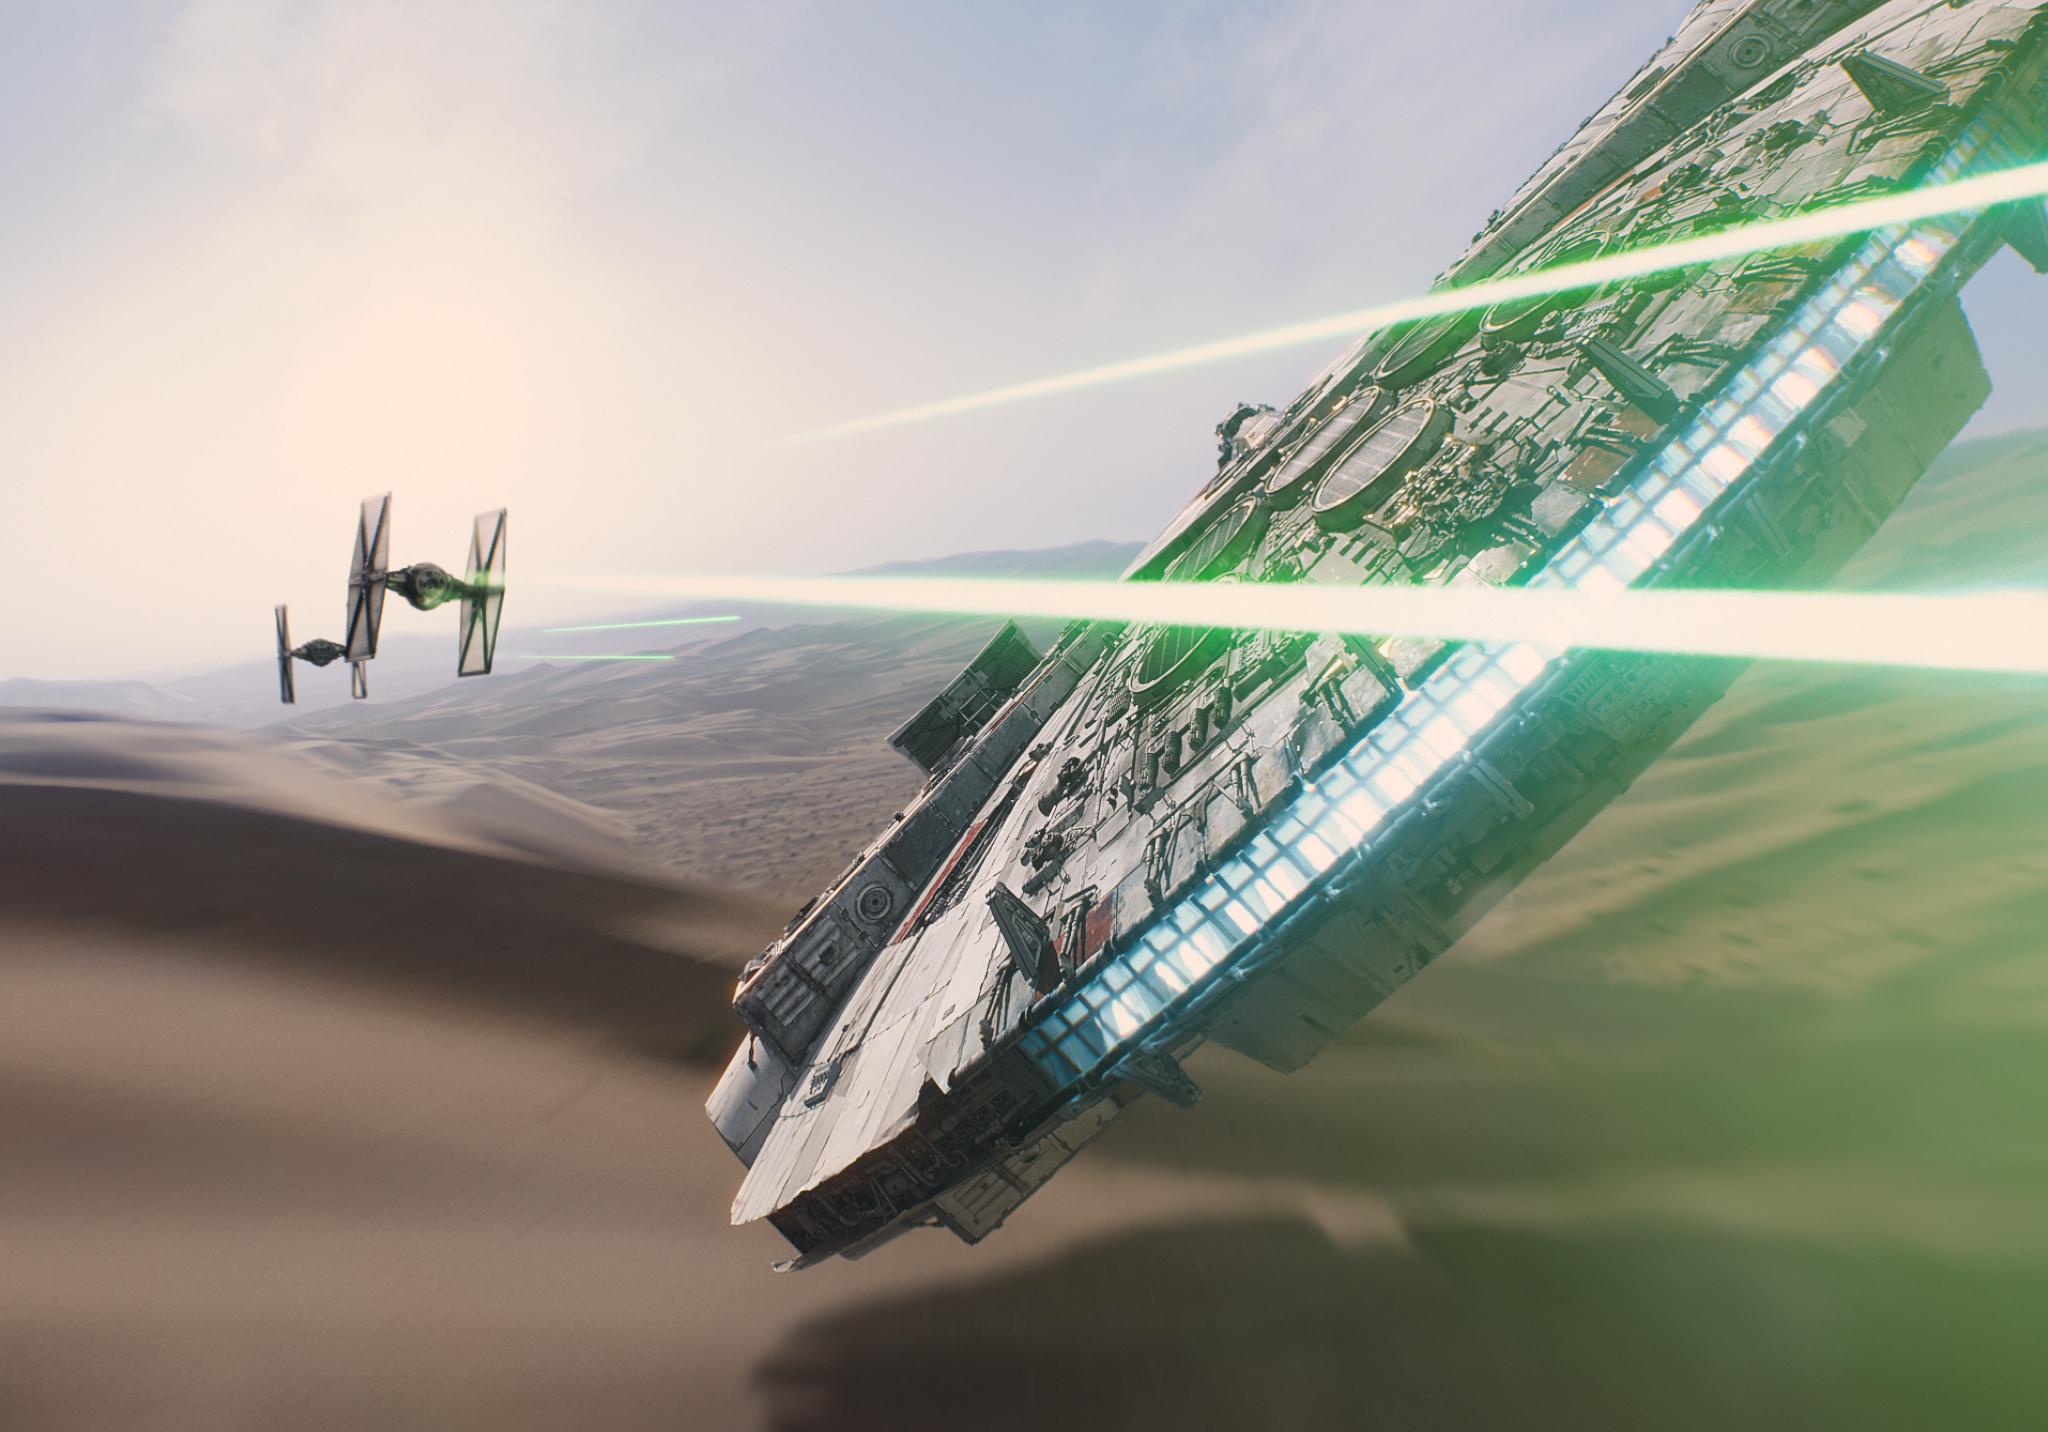 Star Wars Millennium Falcon appears in profile of Disney CEO